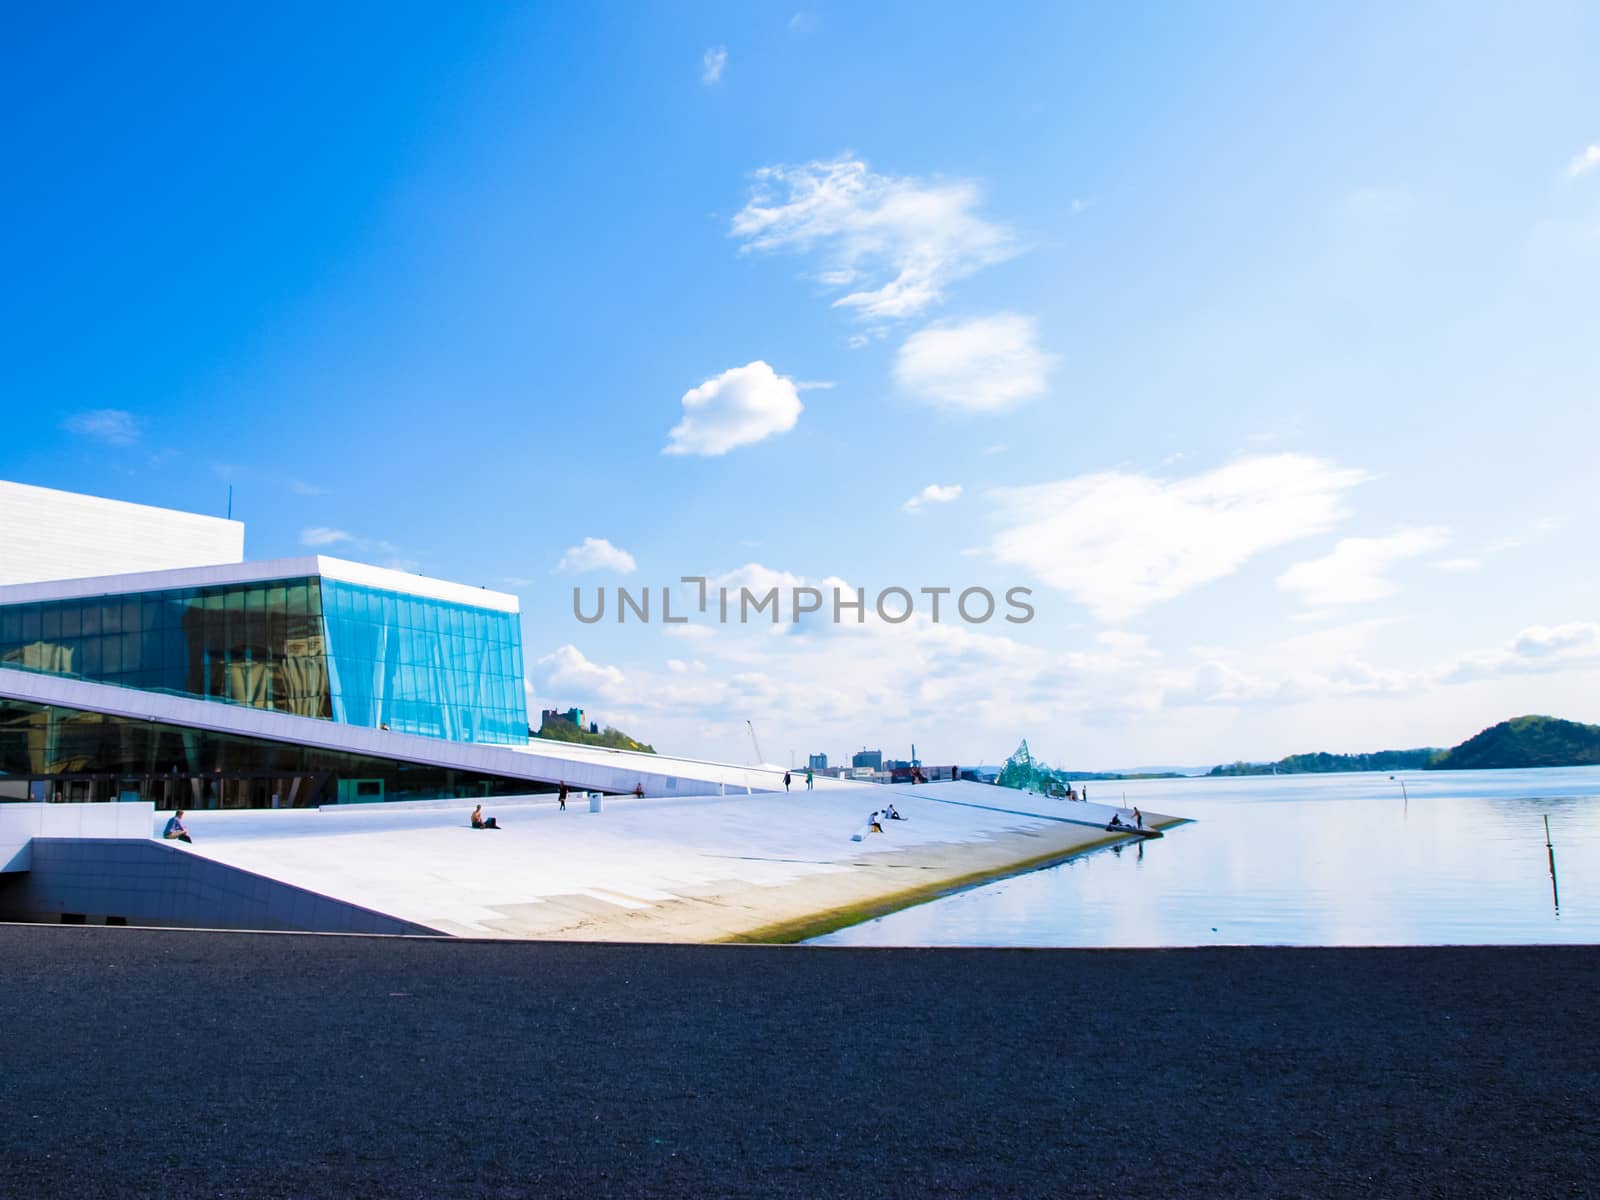 Opera house Oslo, Norway by Arvebettum